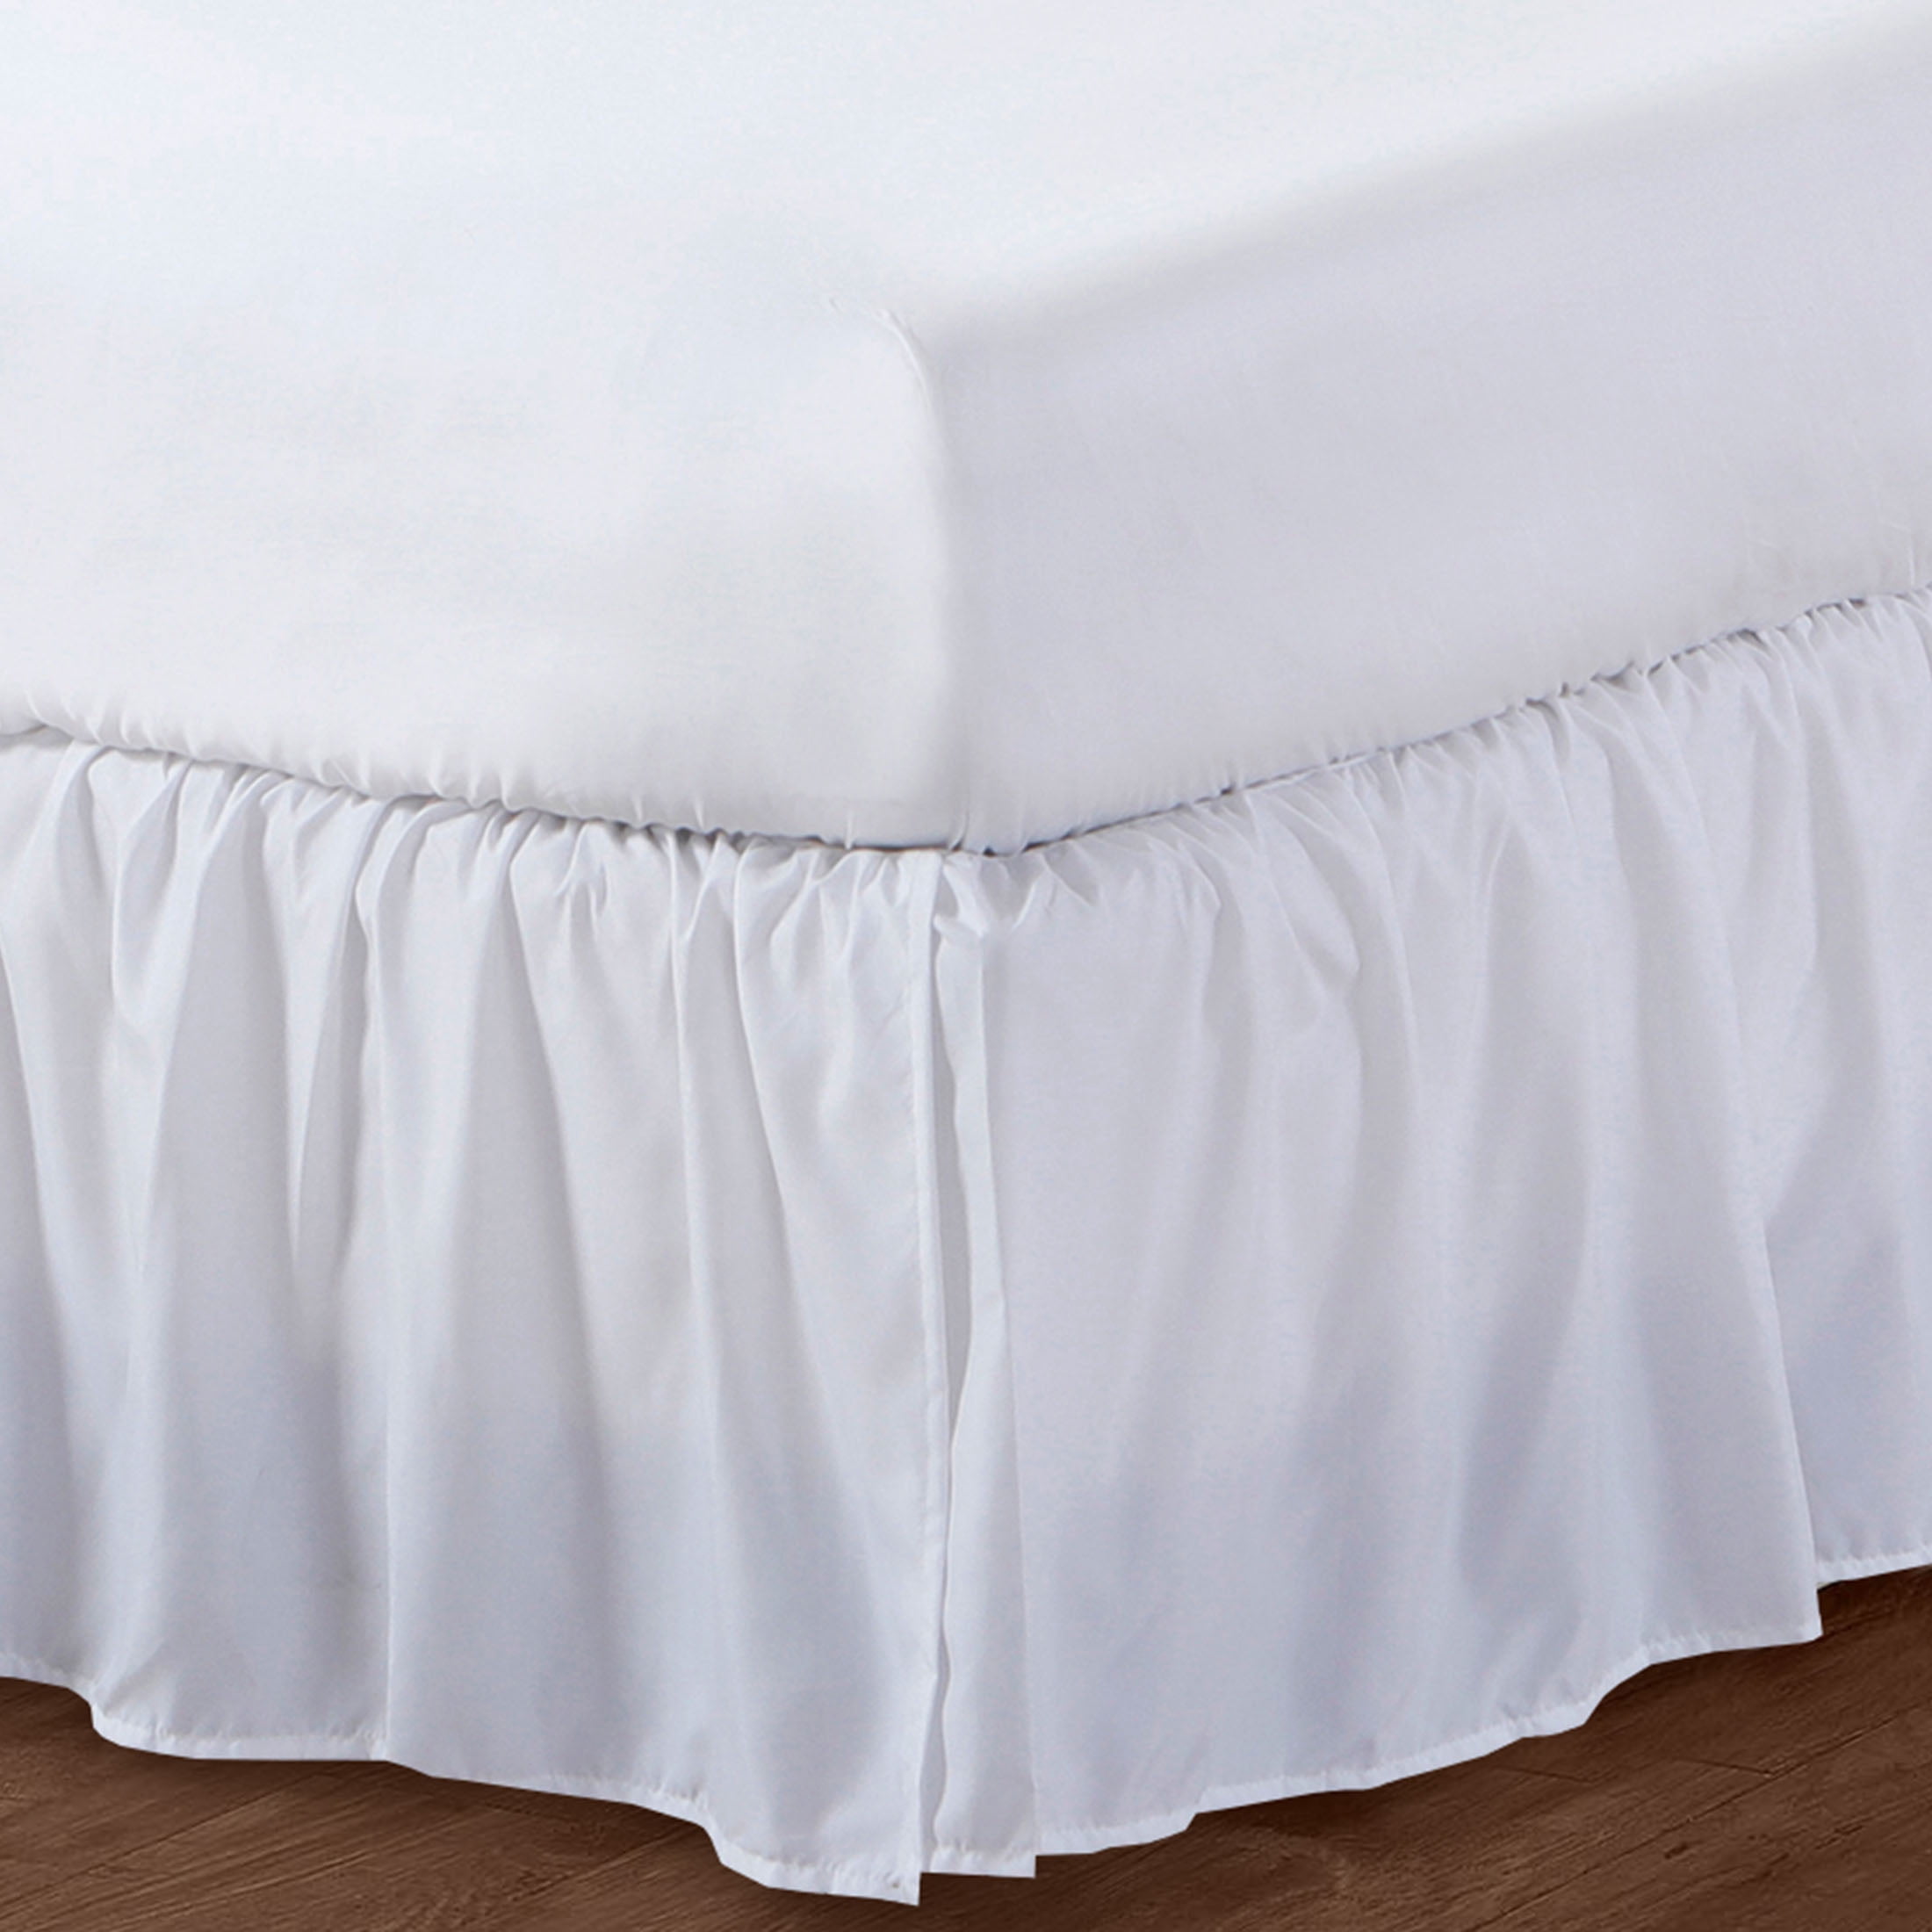 WonderSkirt Wraparound Ruffled 15 Microfiber Bedskirt, White, King 